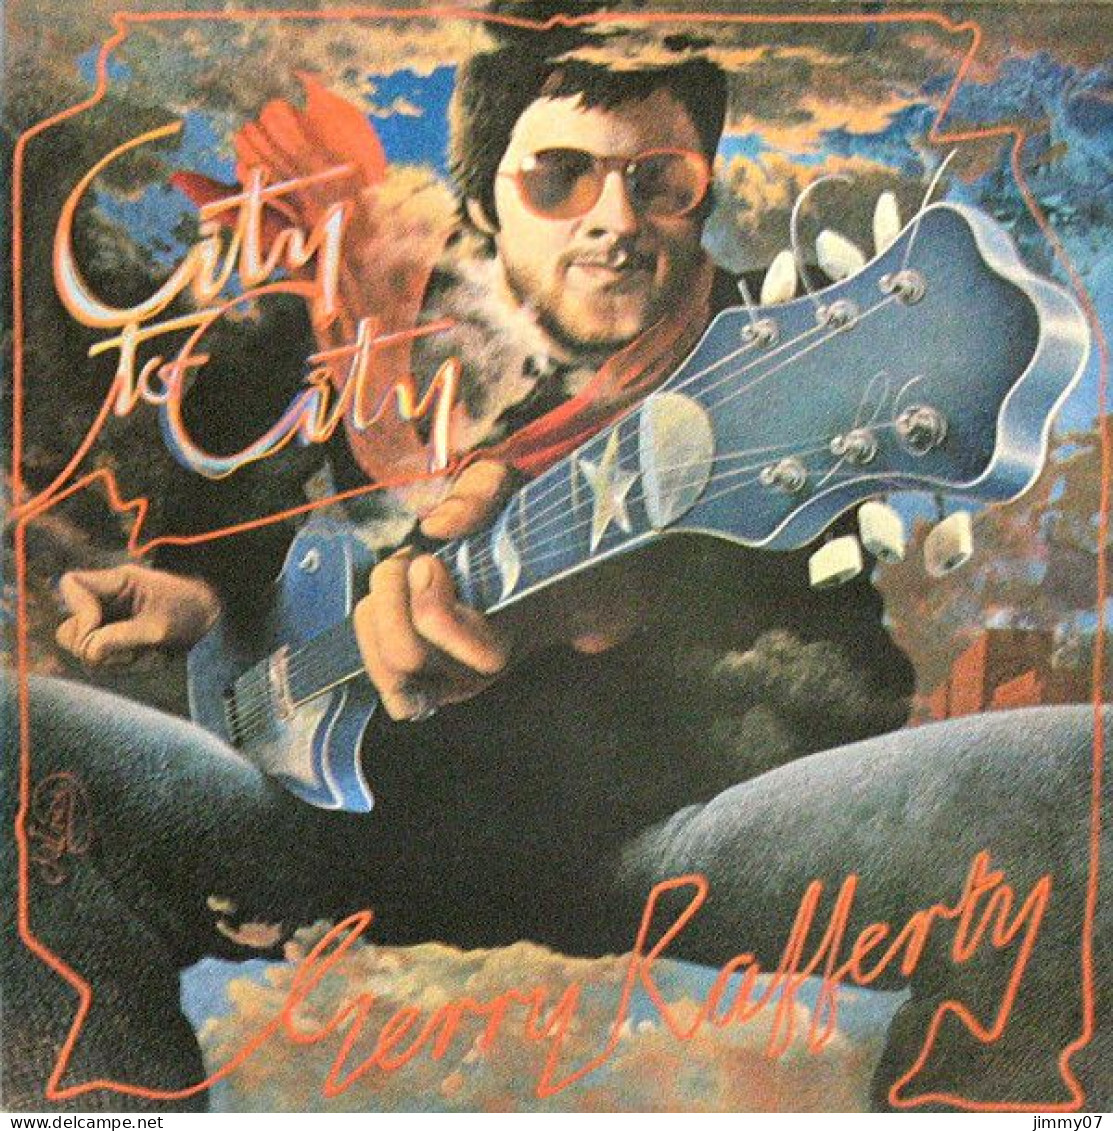 Gerry Rafferty - City To City (LP, Album) - Rock